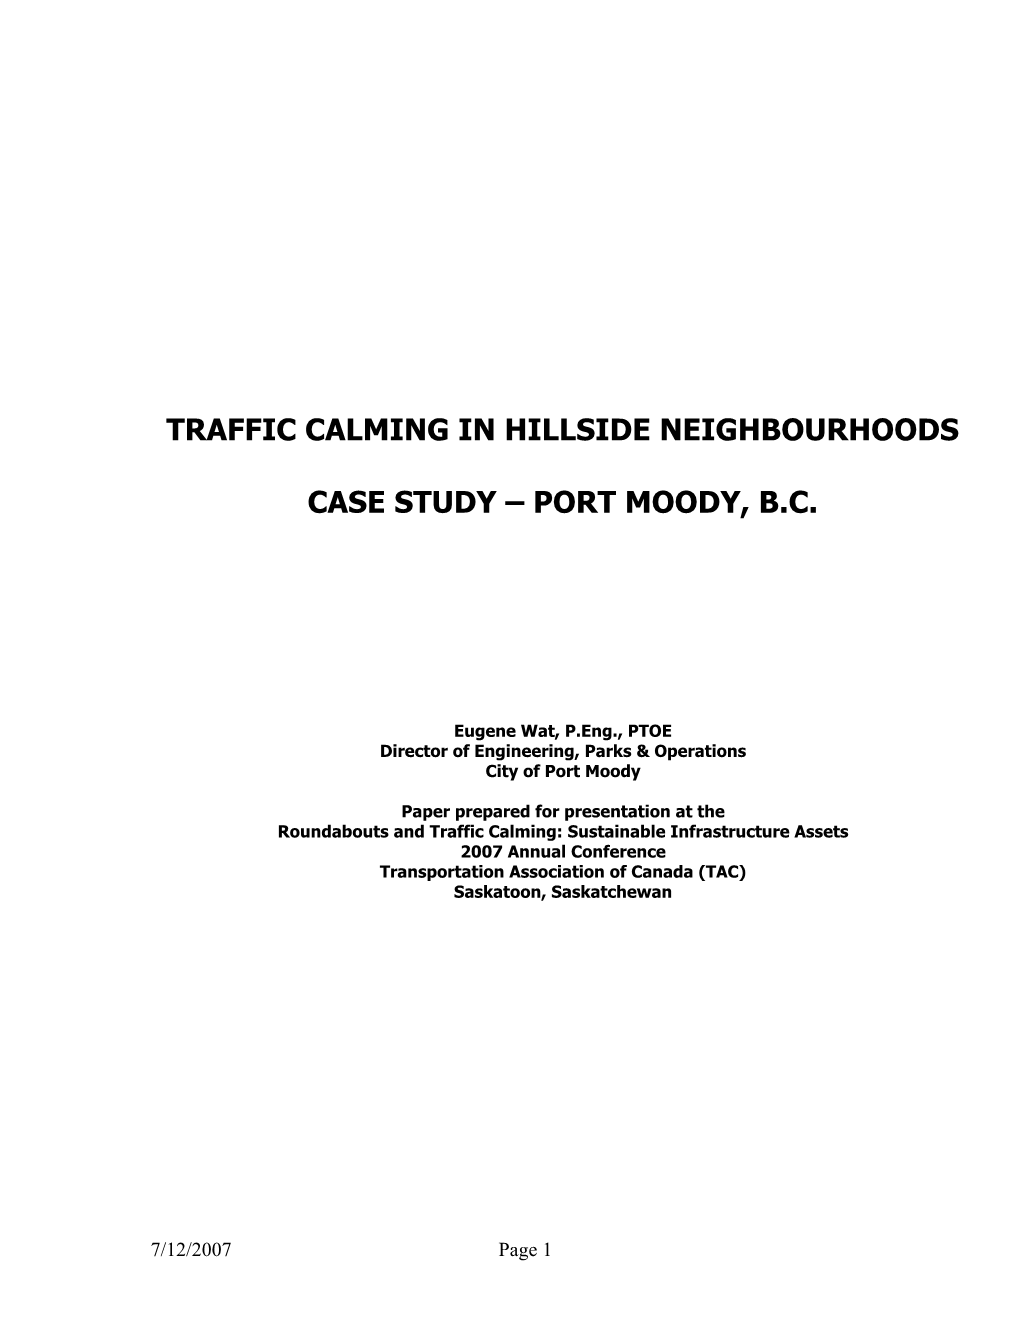 Traffic Calming in Hillside Neighbourhoods Case Study